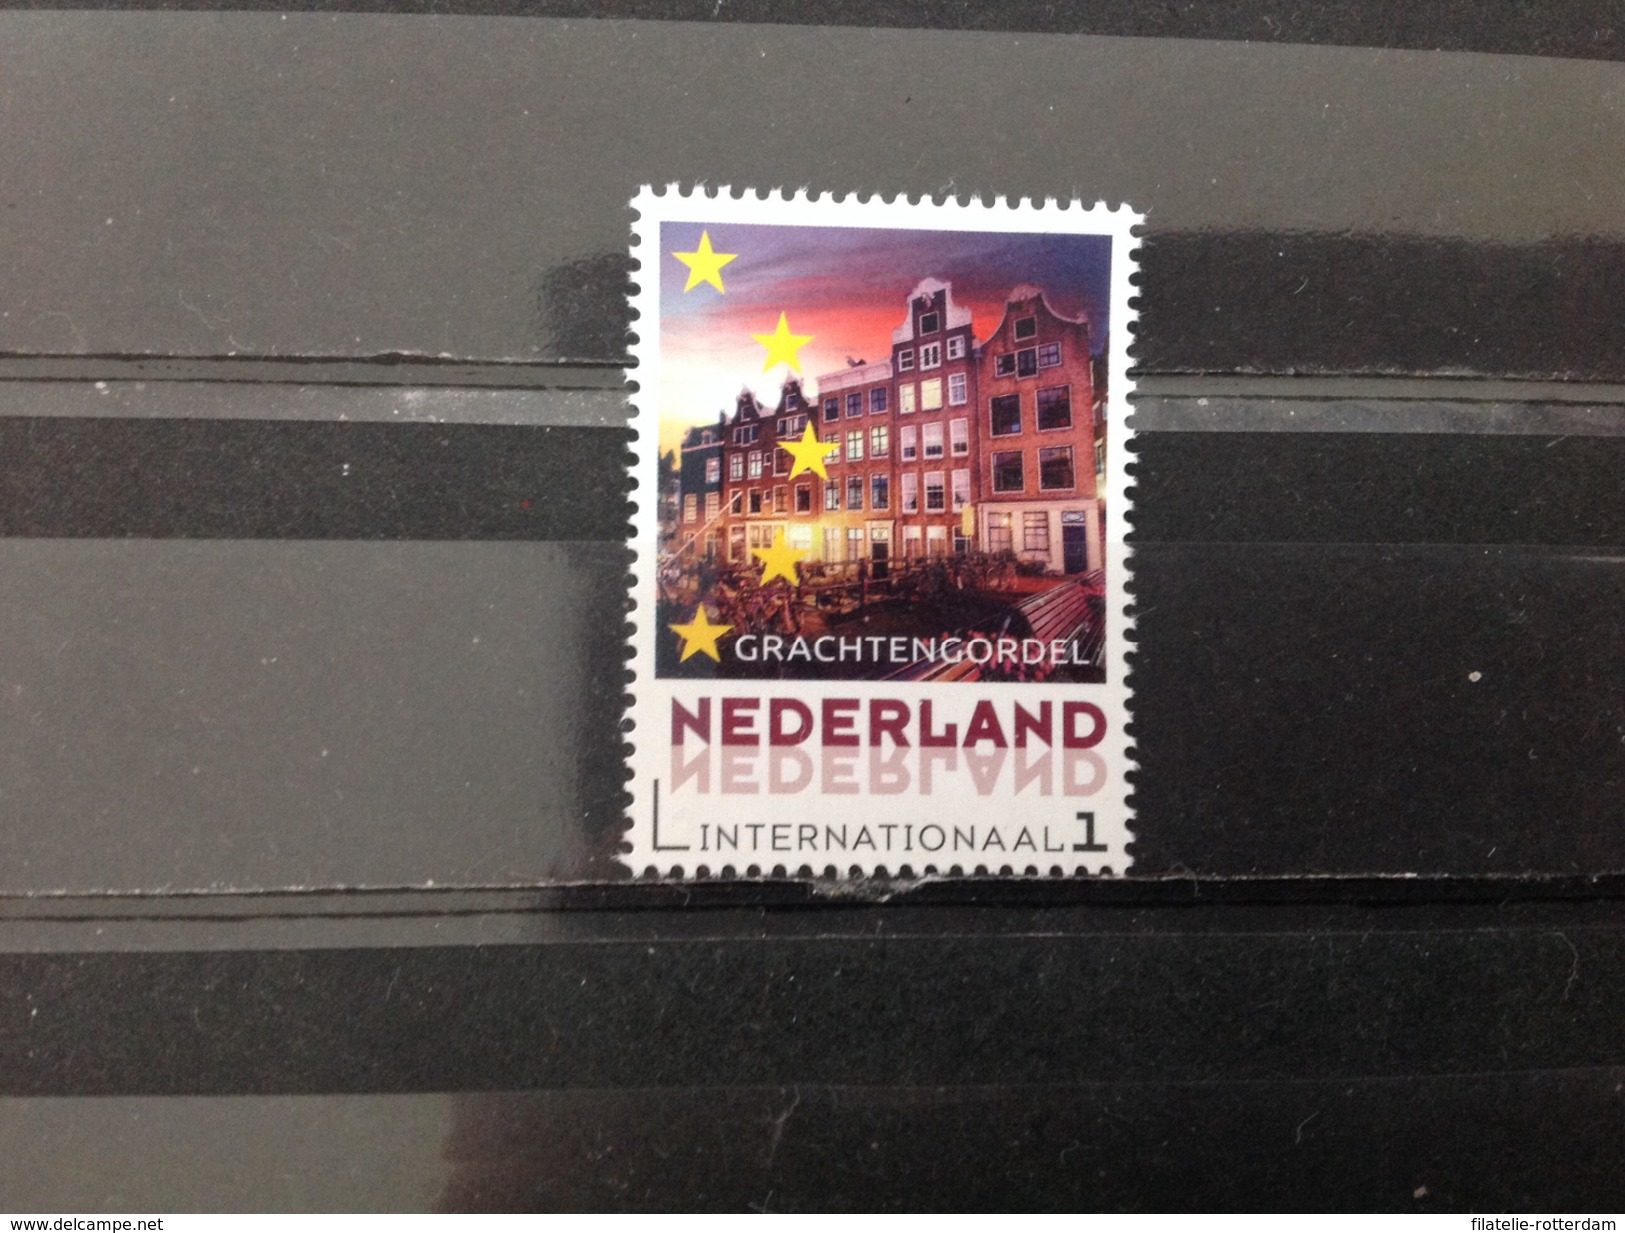 Nederland / The Netherlands - Postfris / MNH - Europazegel Amsterdam, De Grachtengordel 2016 Very Rare! - Unused Stamps